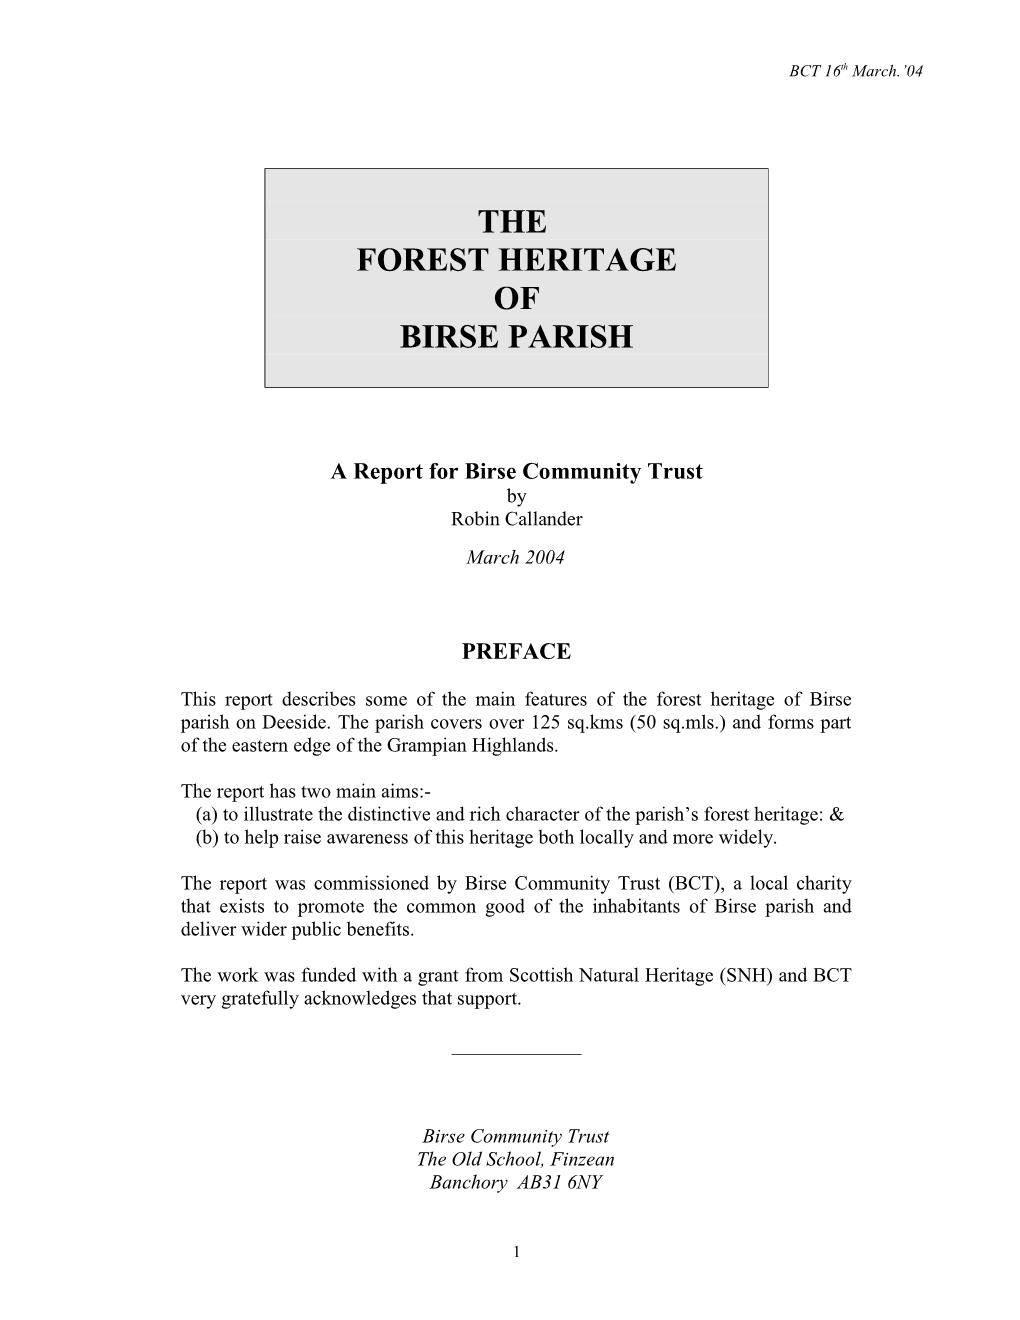 The Forest Heritage of Birse Parish